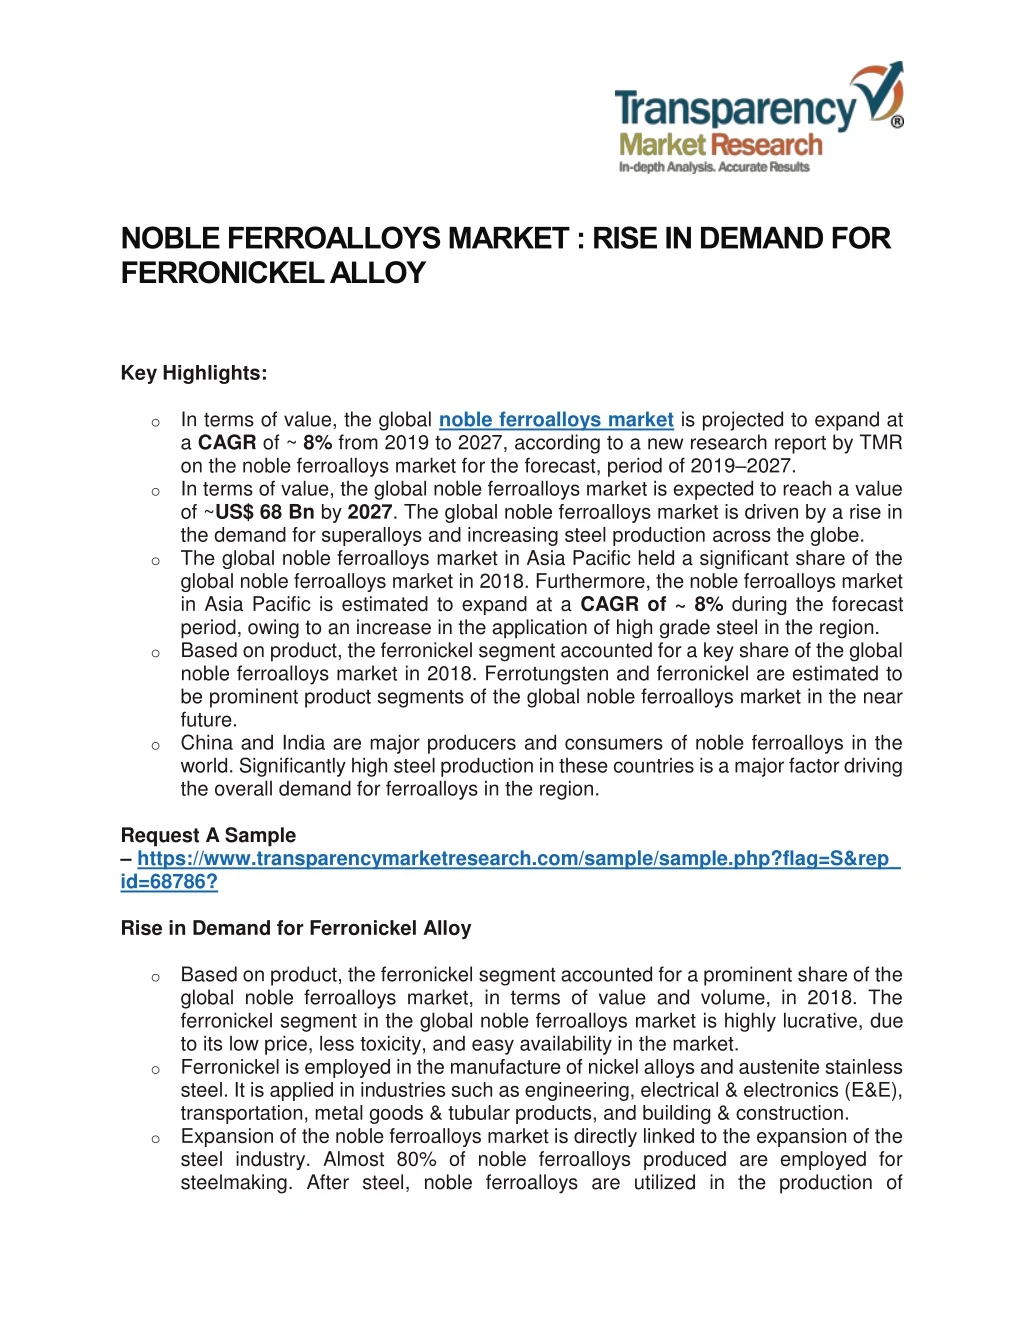 noble ferroalloys market rise in demand